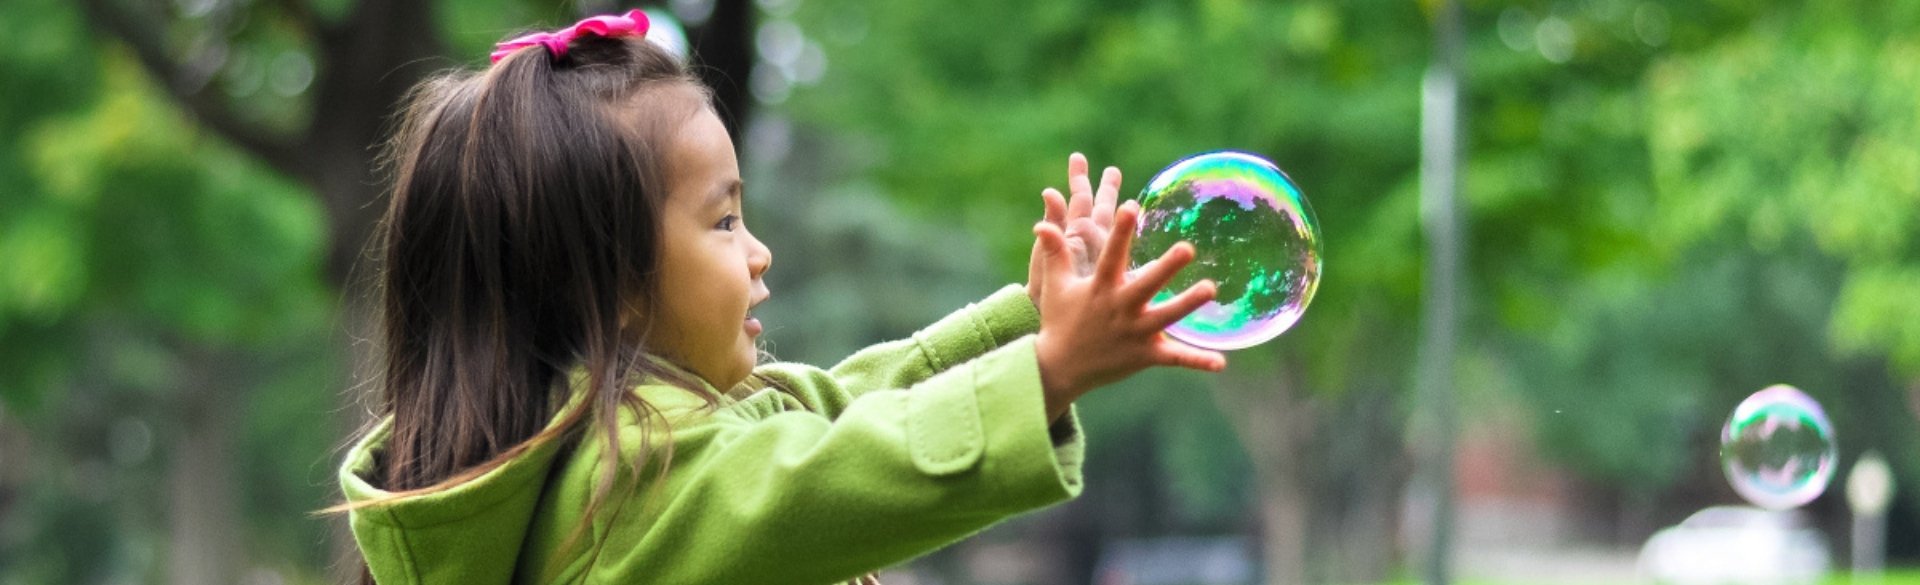 Little girl grabbing bubble